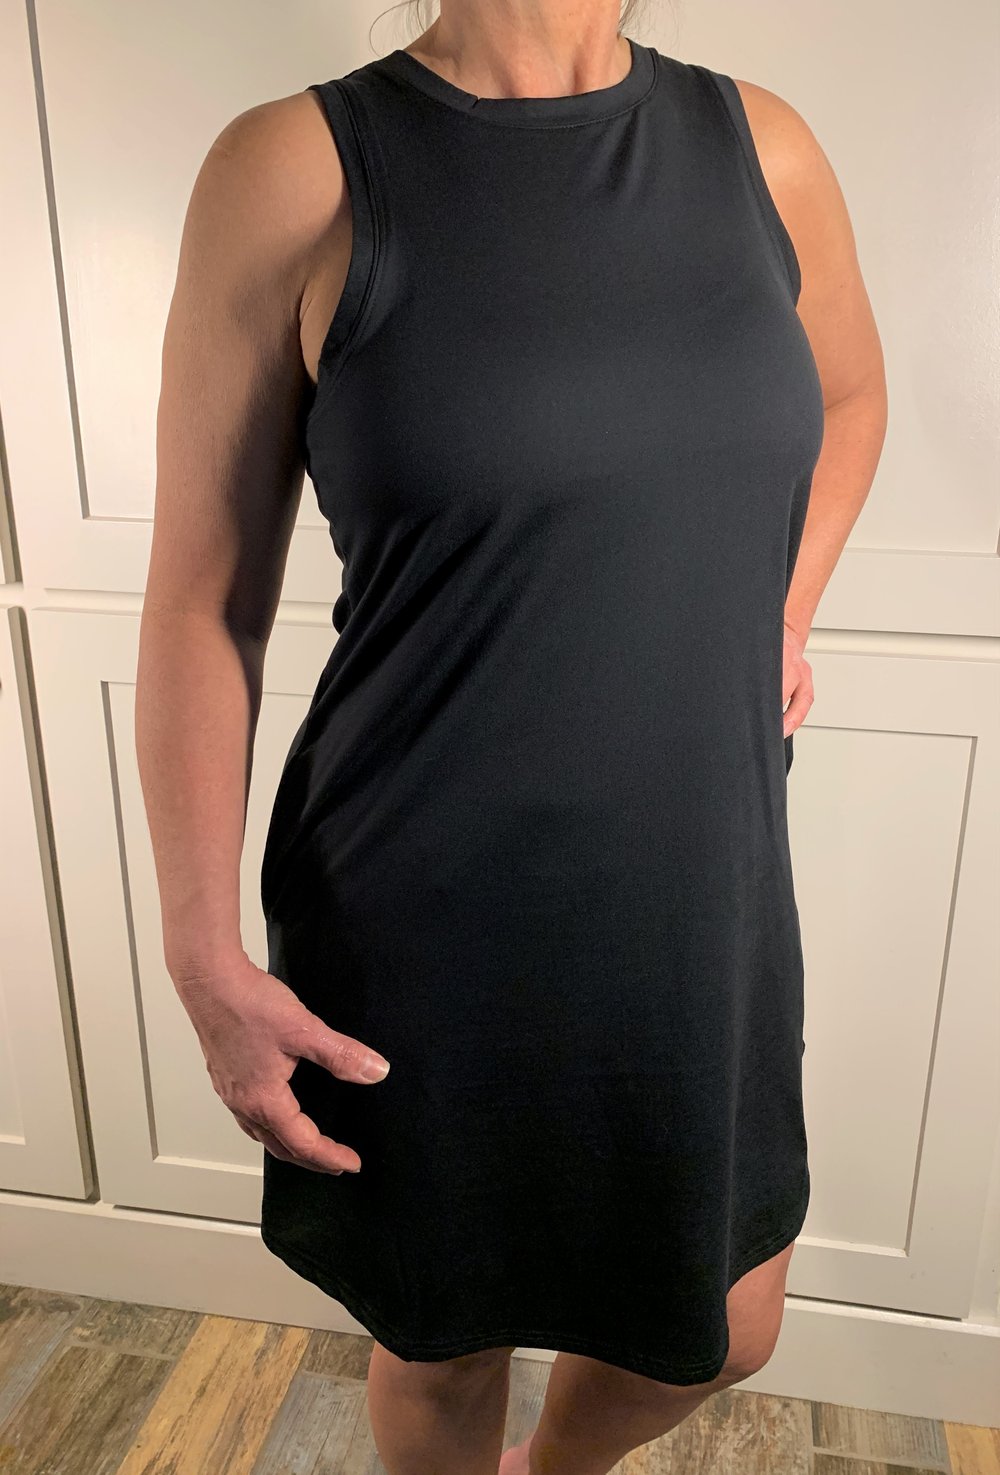 Confidence Seamless Dress in Black, VENUS